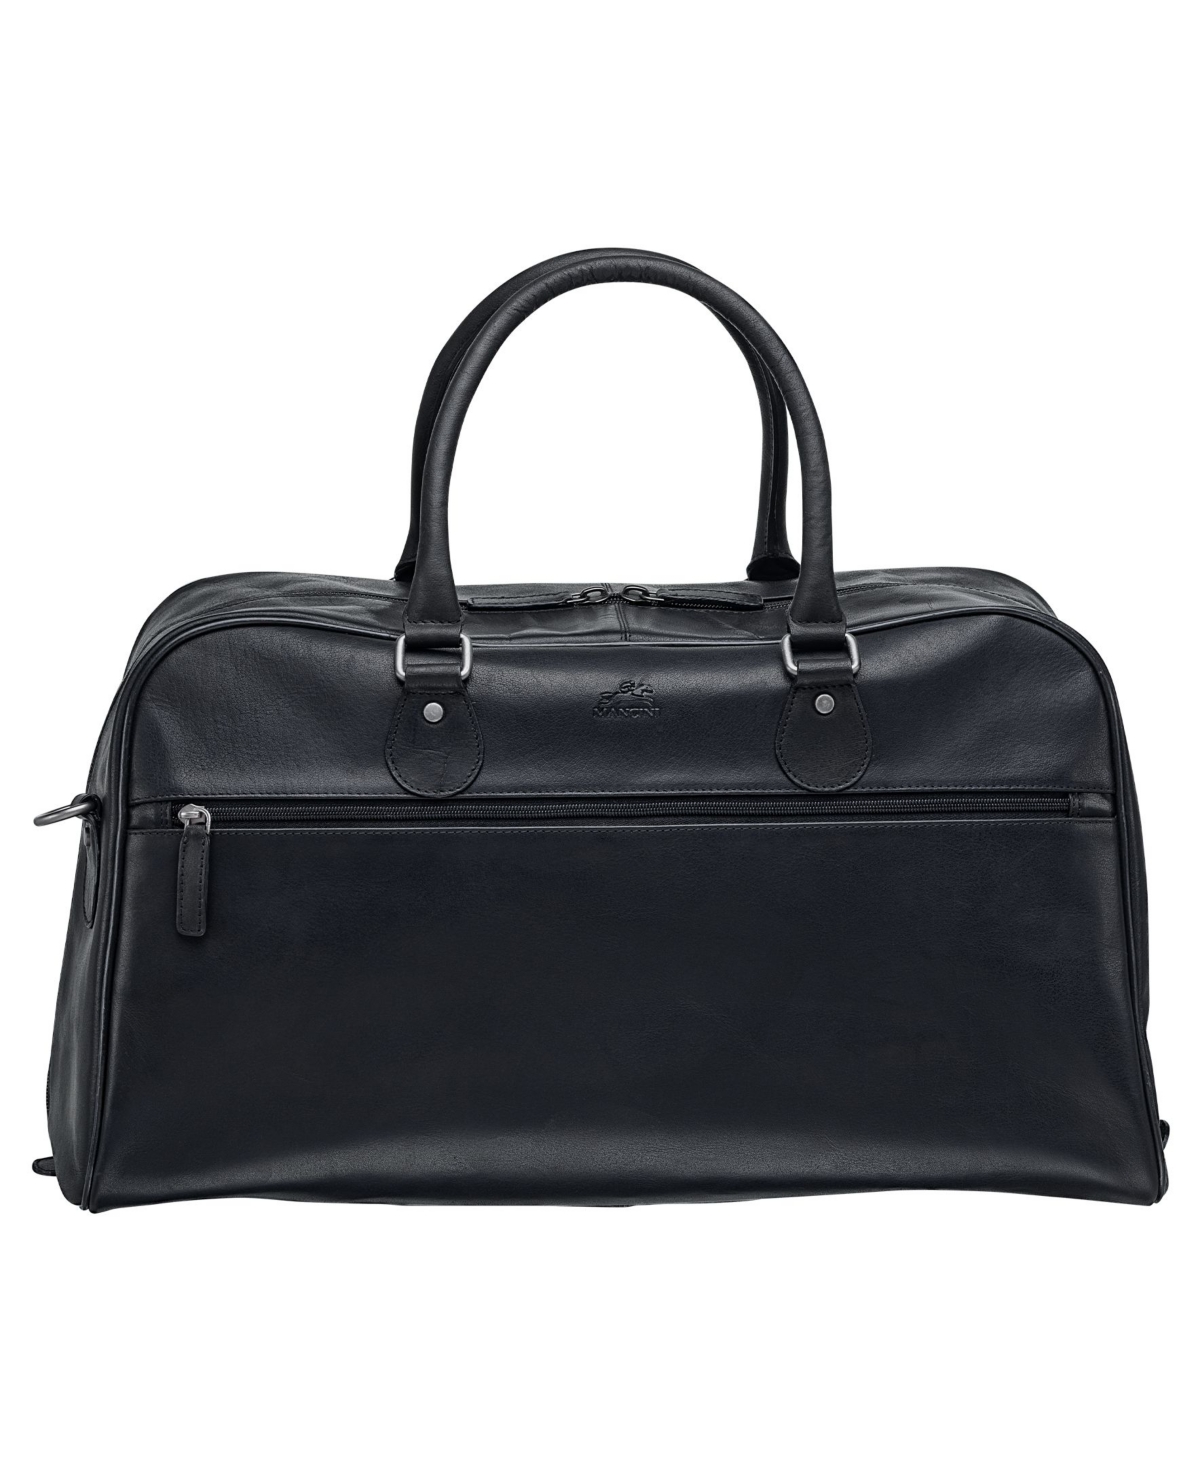 Men's Classic Duffle Bag - Black